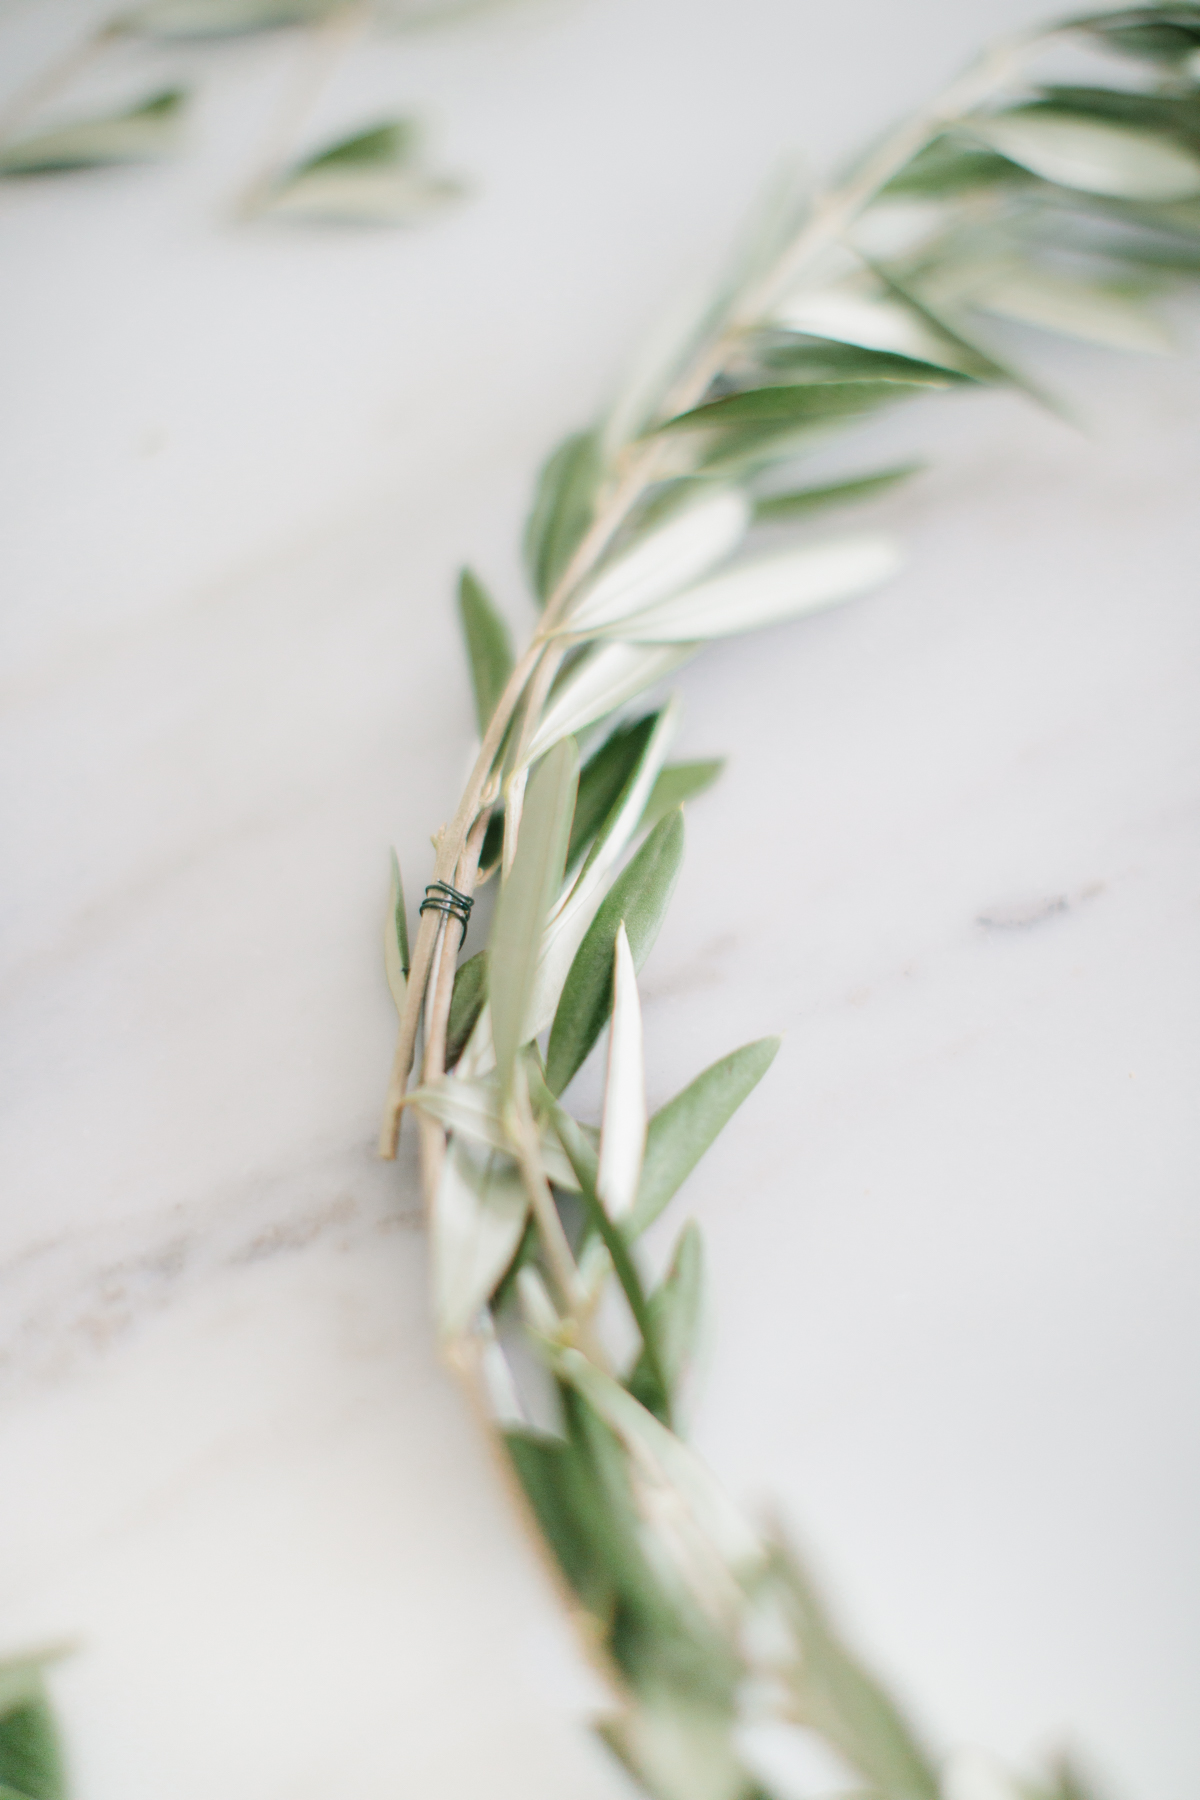 Olive wreath